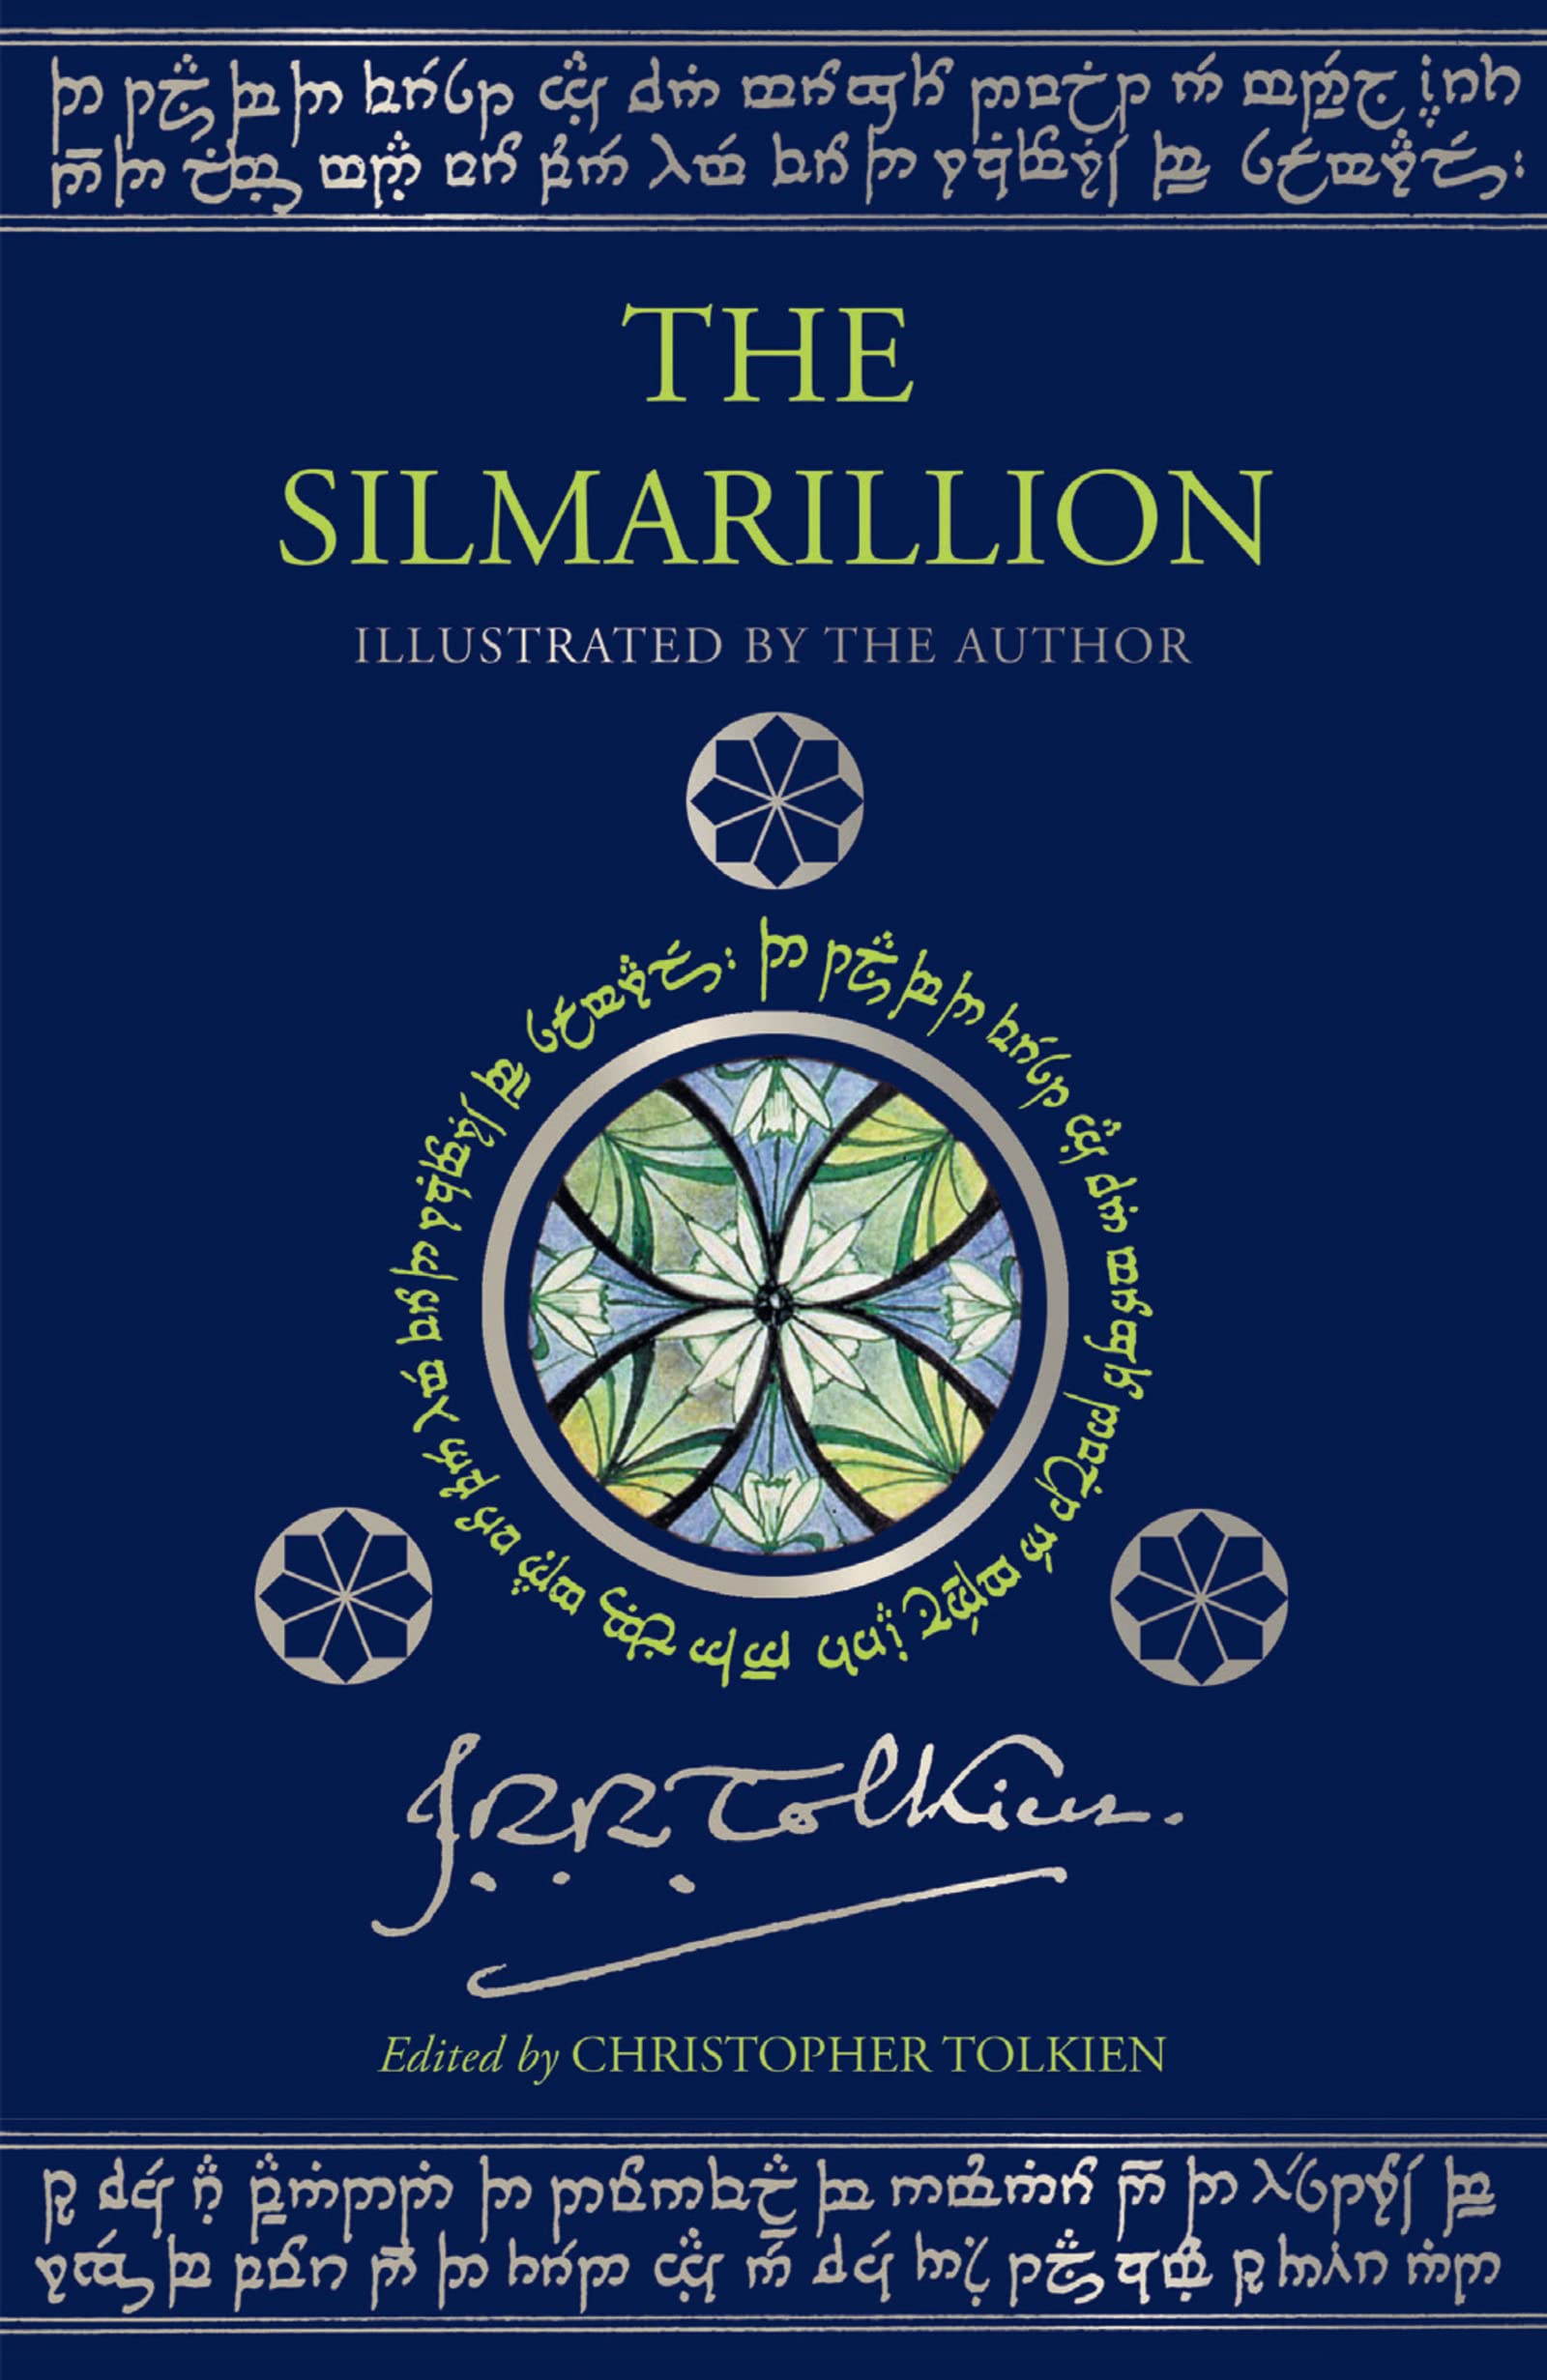 The Silmarillion (Image: HarperCollins Publishers)